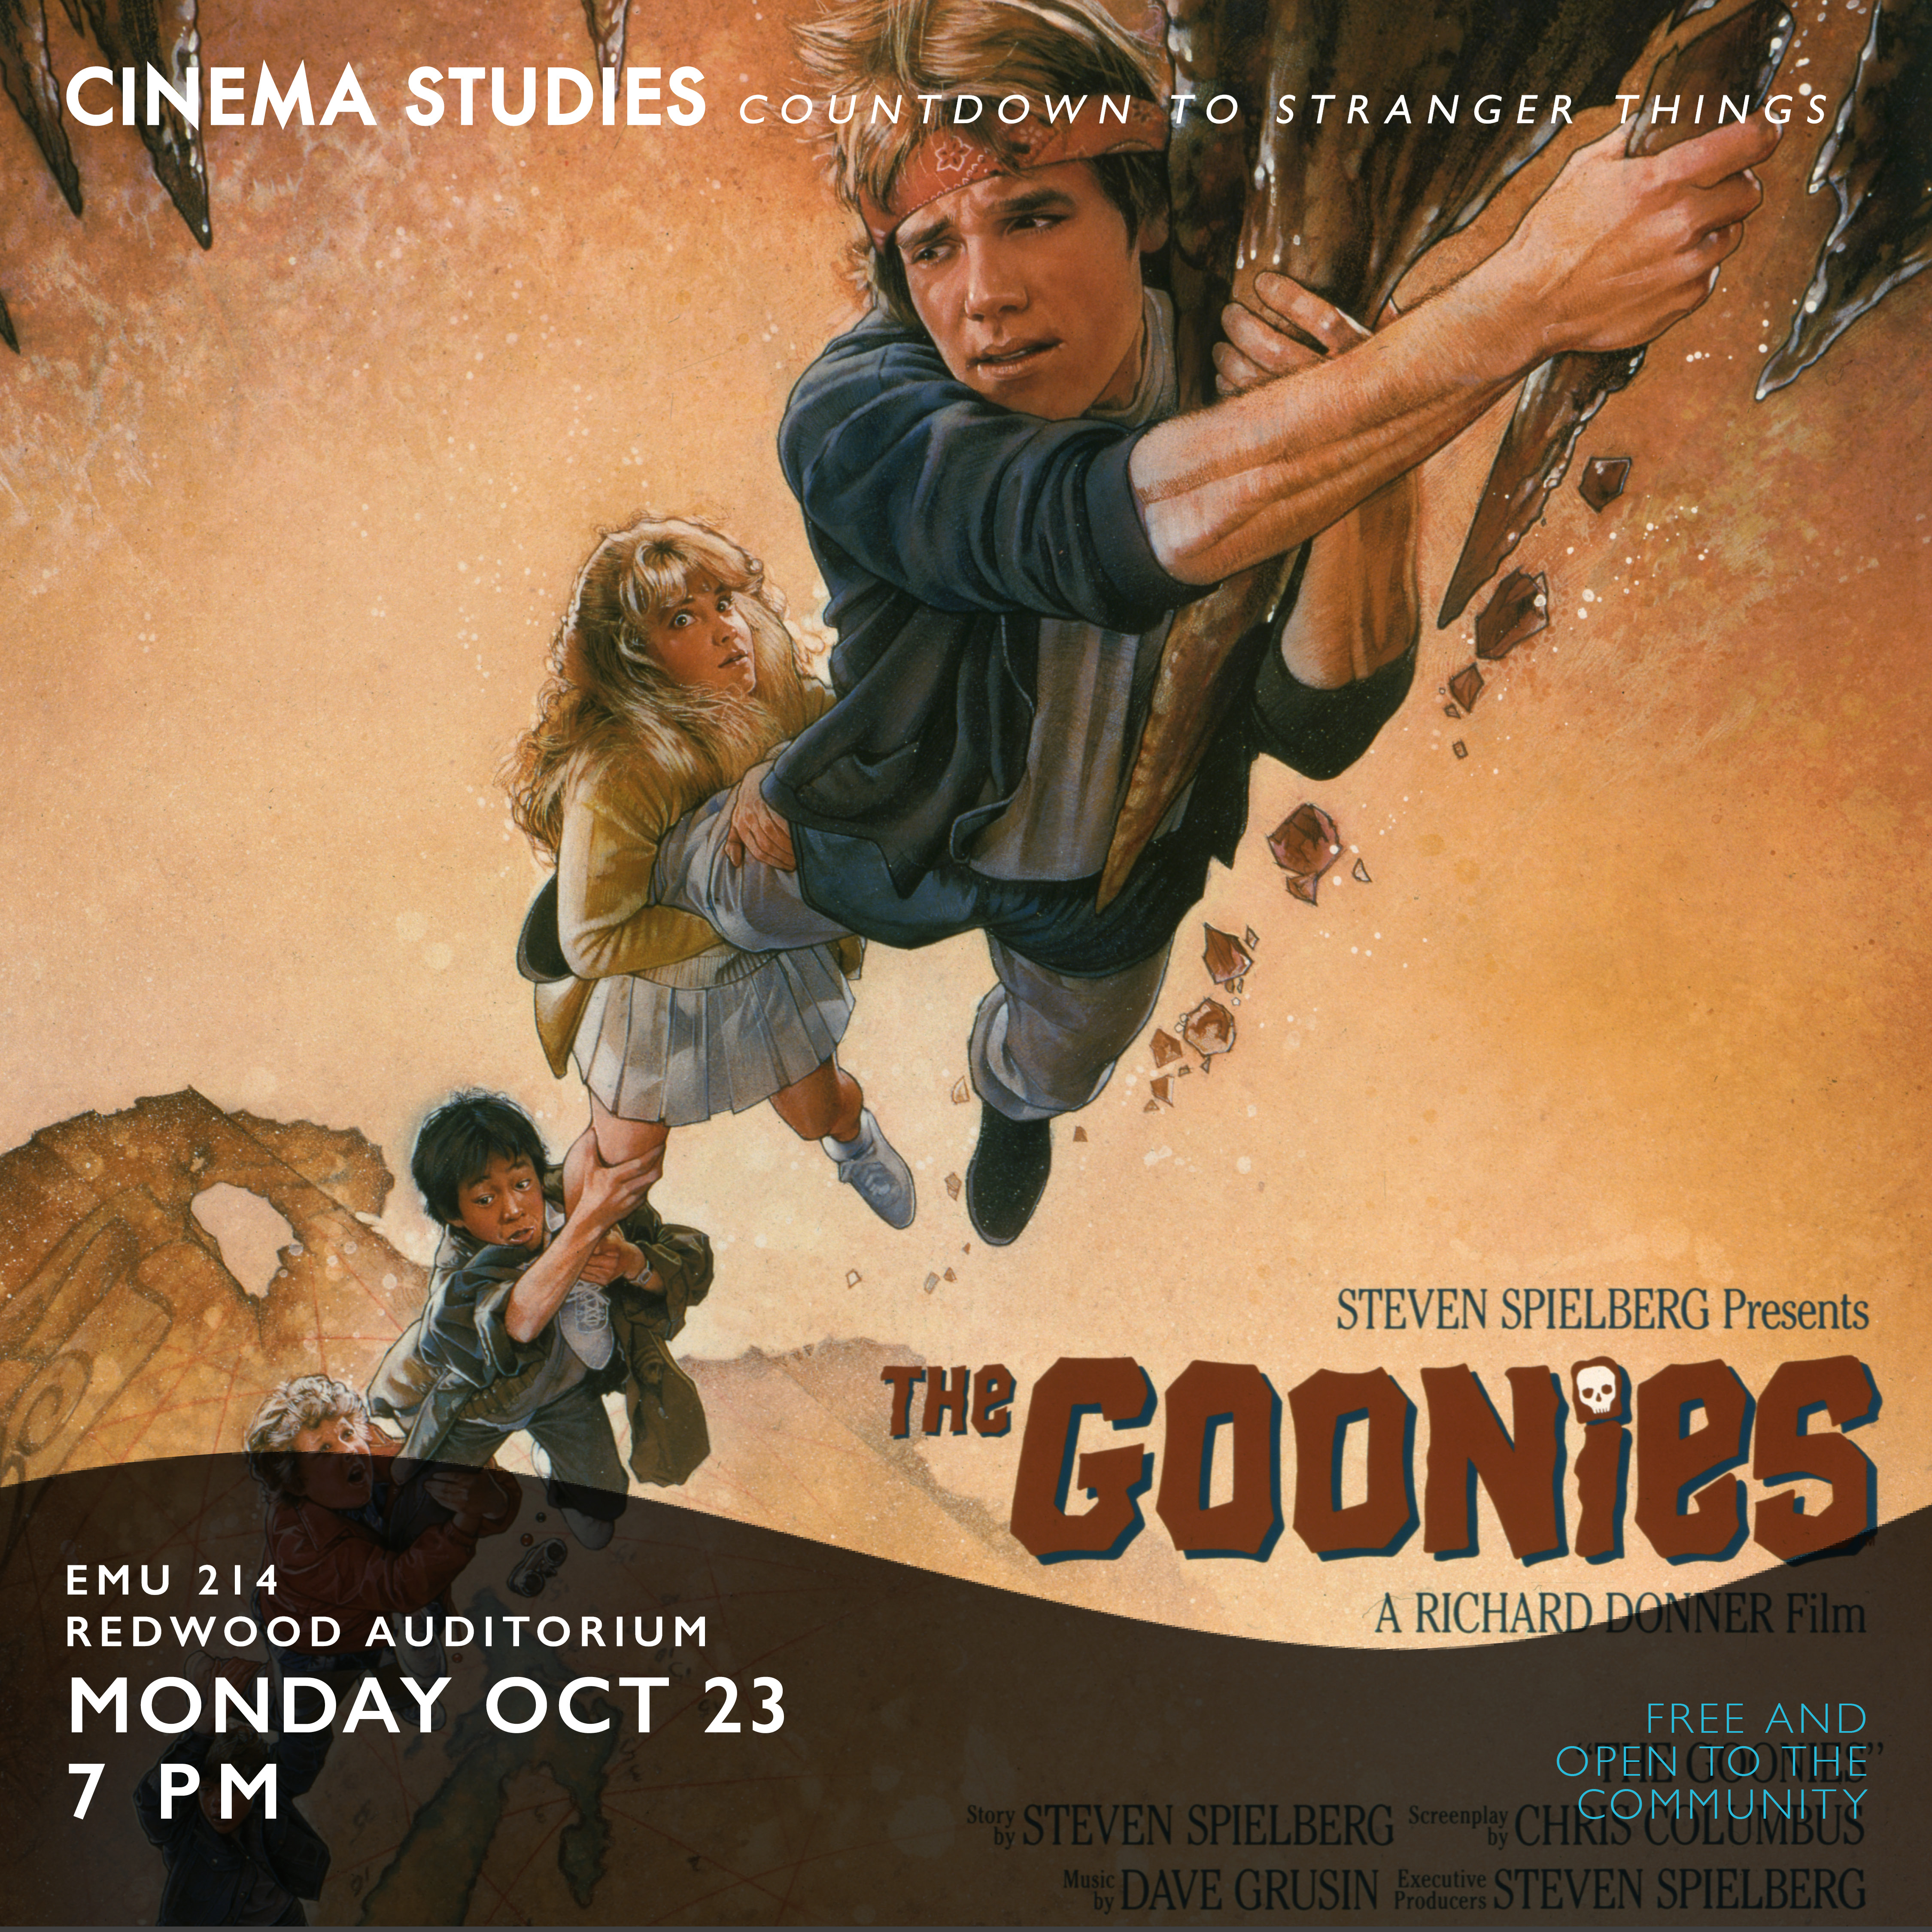 Poster for screening of "Goonies"